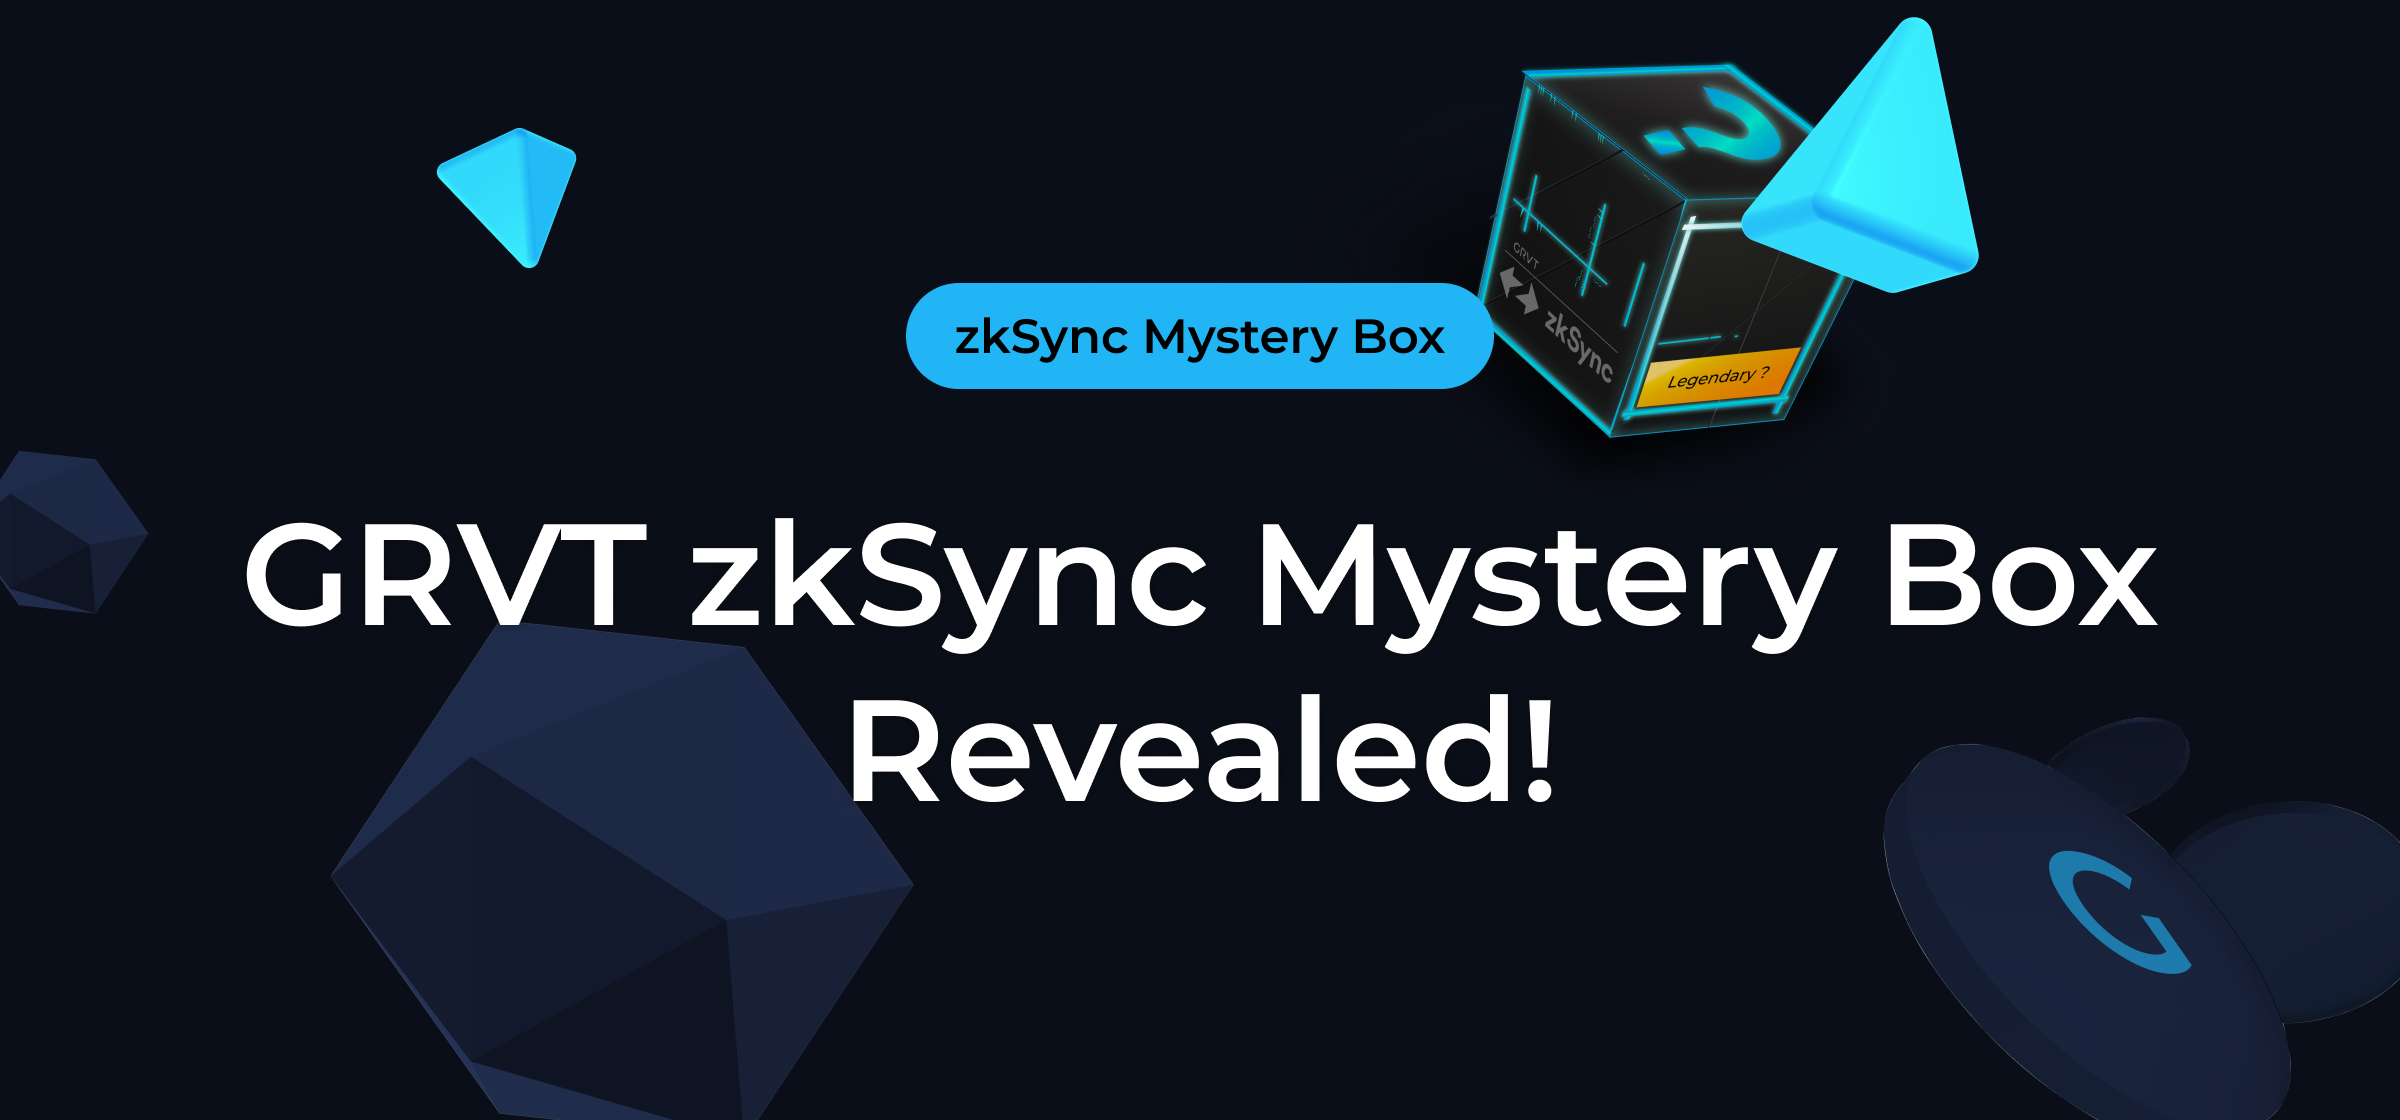 zkSync Mystery Box Details Revealed!